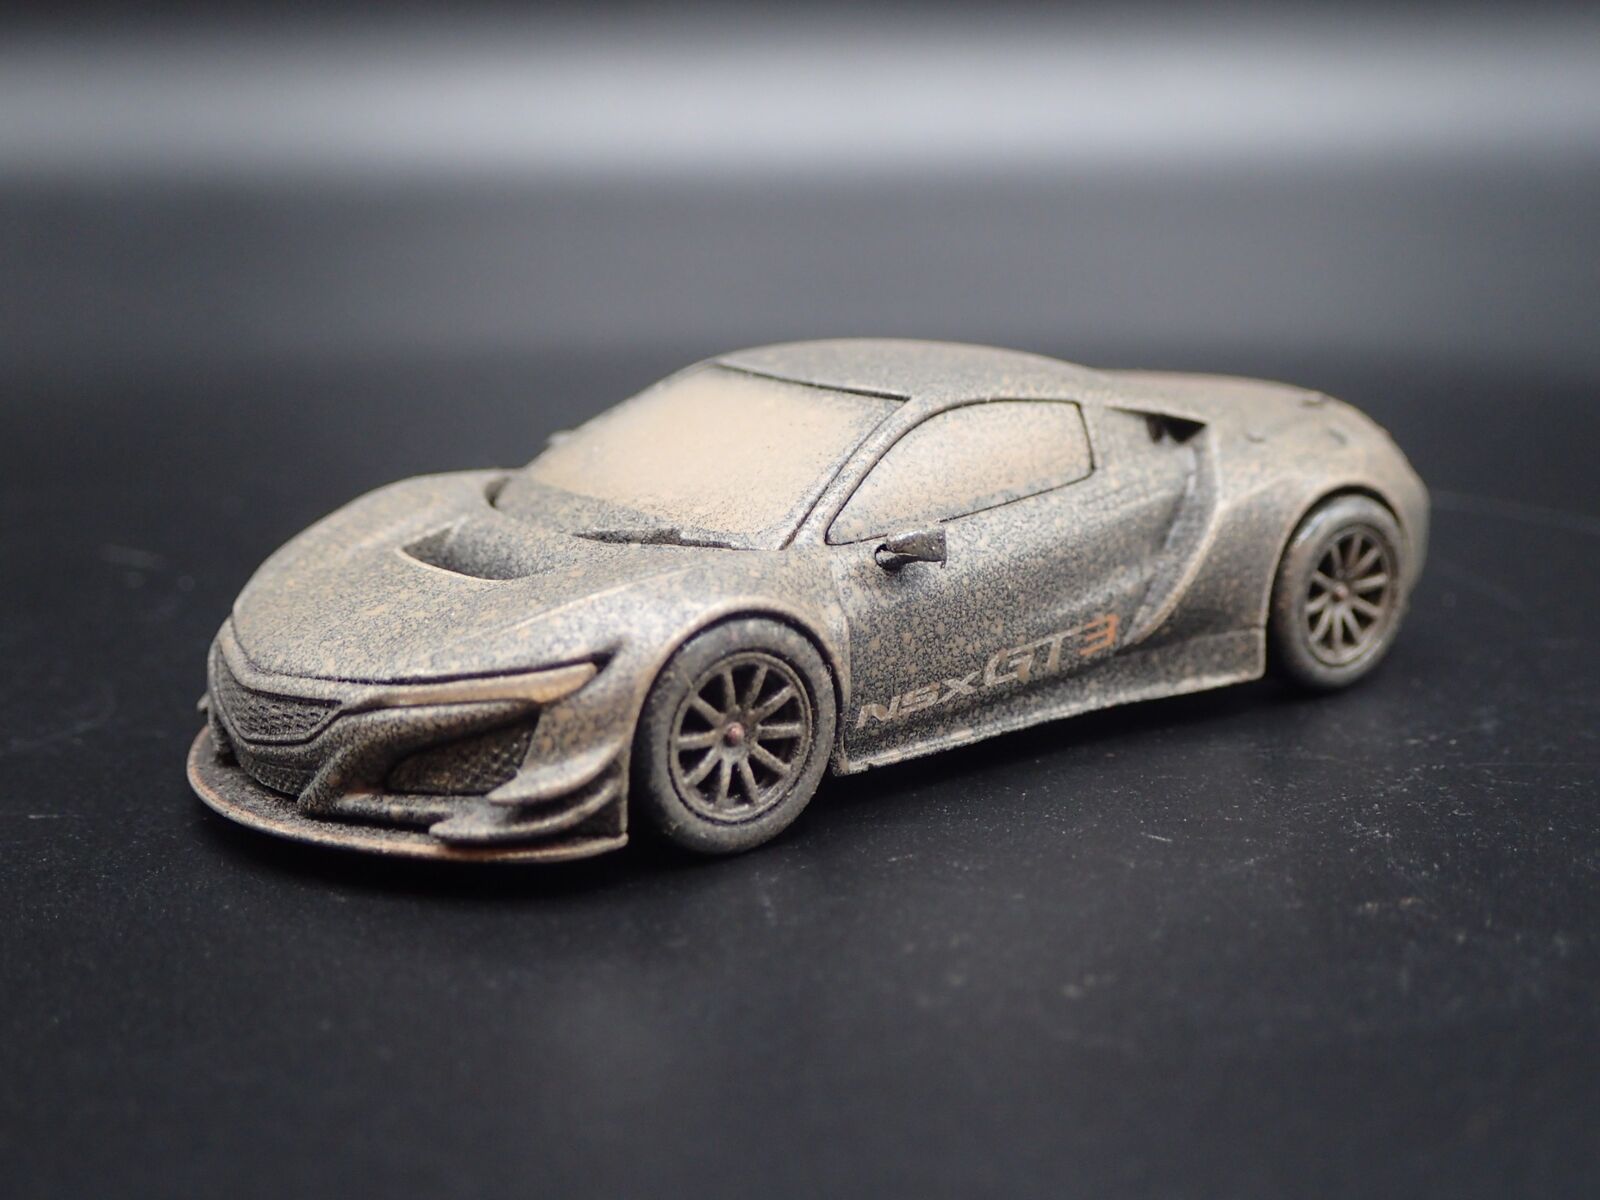 2016-2020 ACURA NSX GT3 RACE WRECKED MUDDY 1:64 SCALE DIORAMA DIECAST MODEL CAR